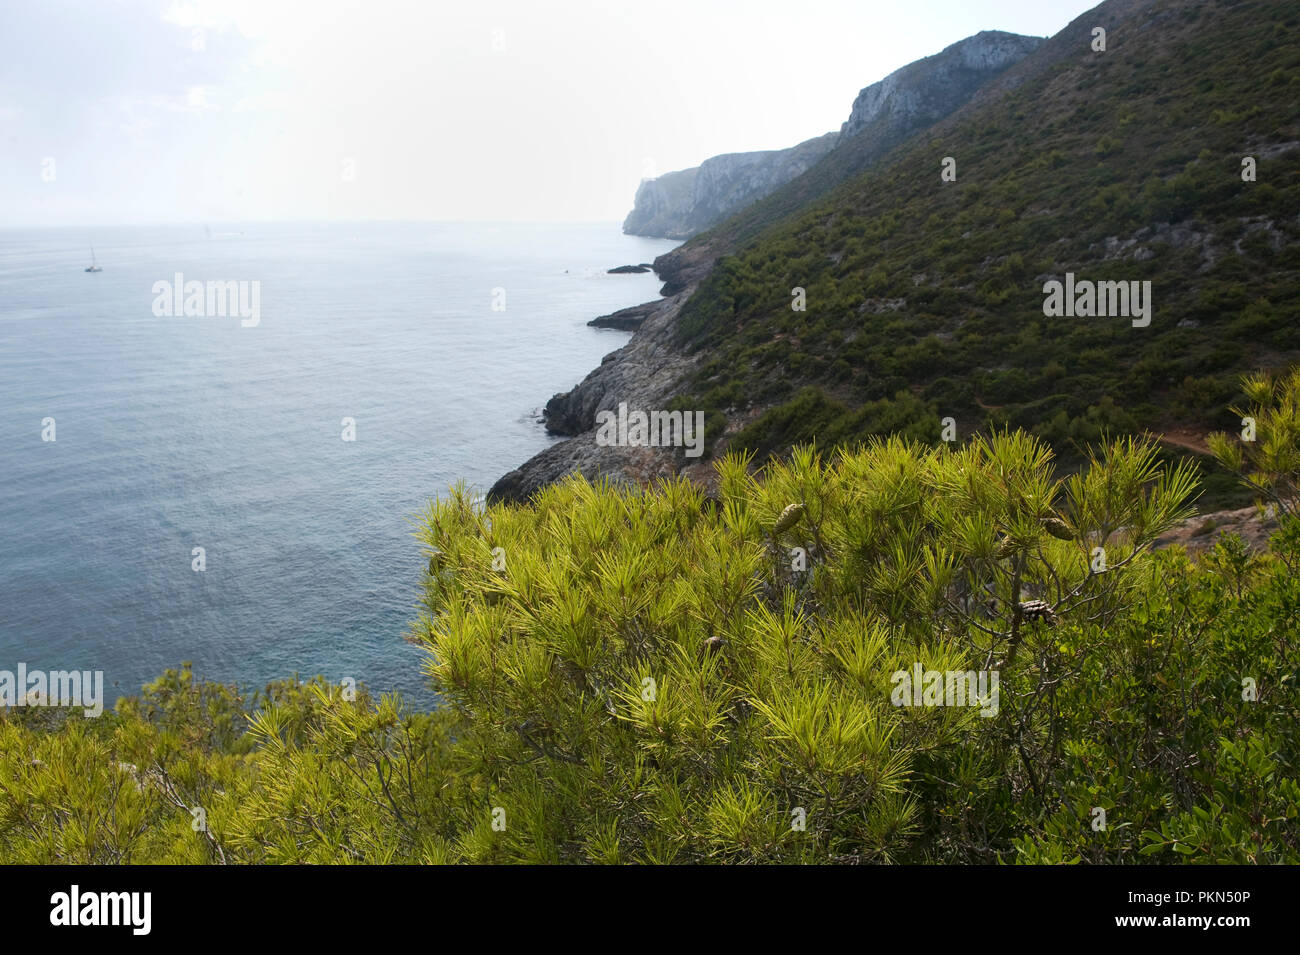 Cabo San Antonio cliffs near Denia, Spain. Stock Photo